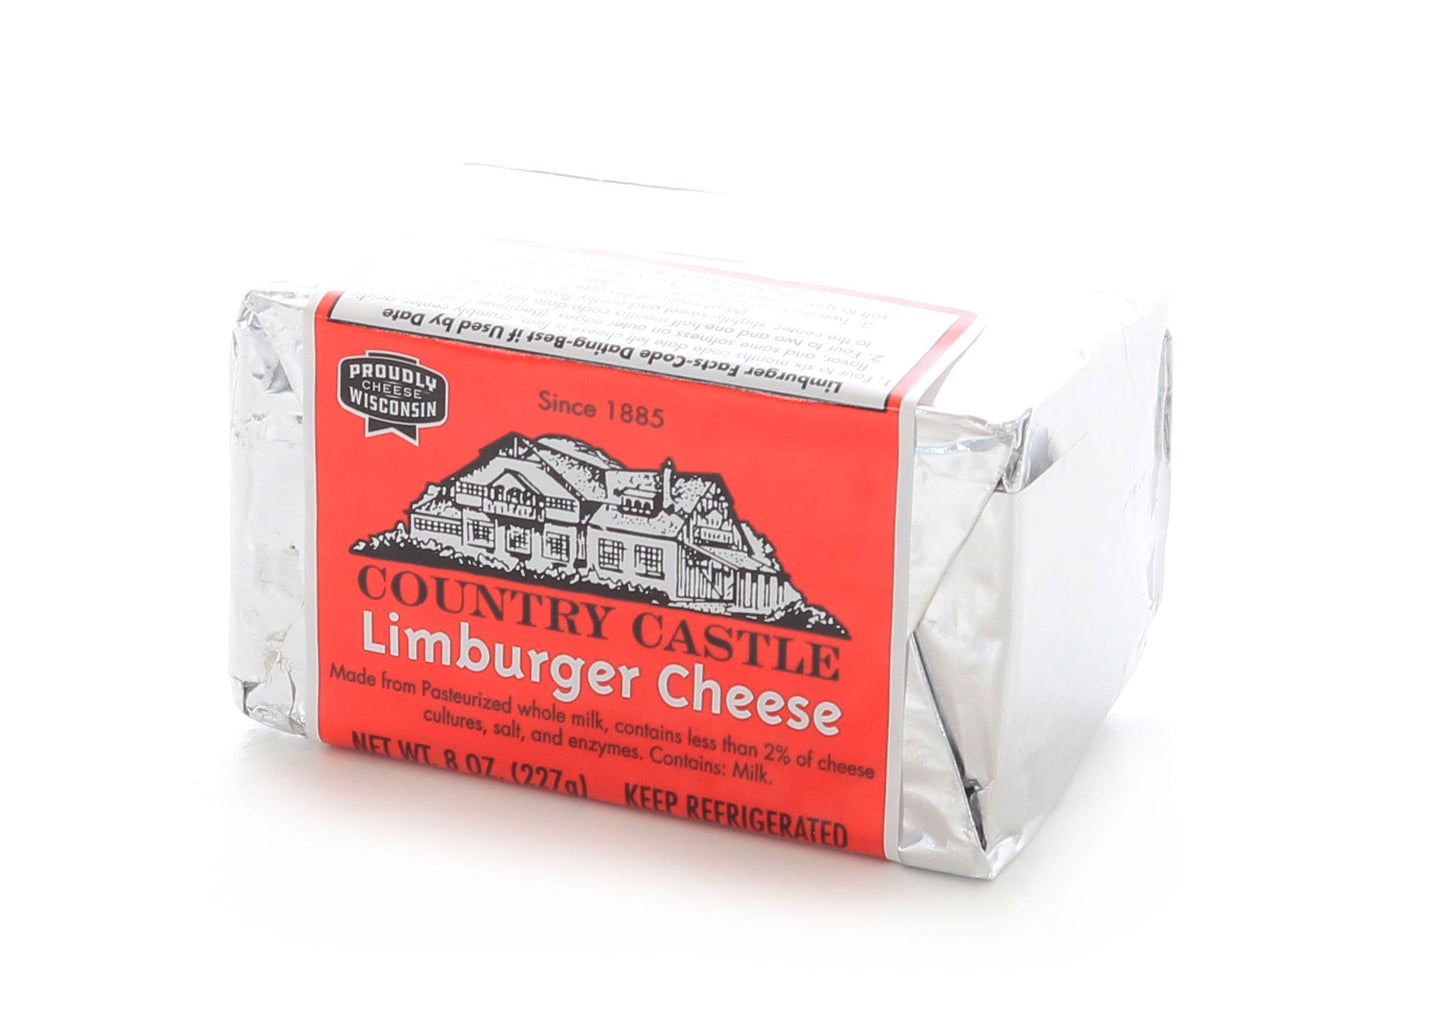 8 ounces of wisconsin limburger cheese